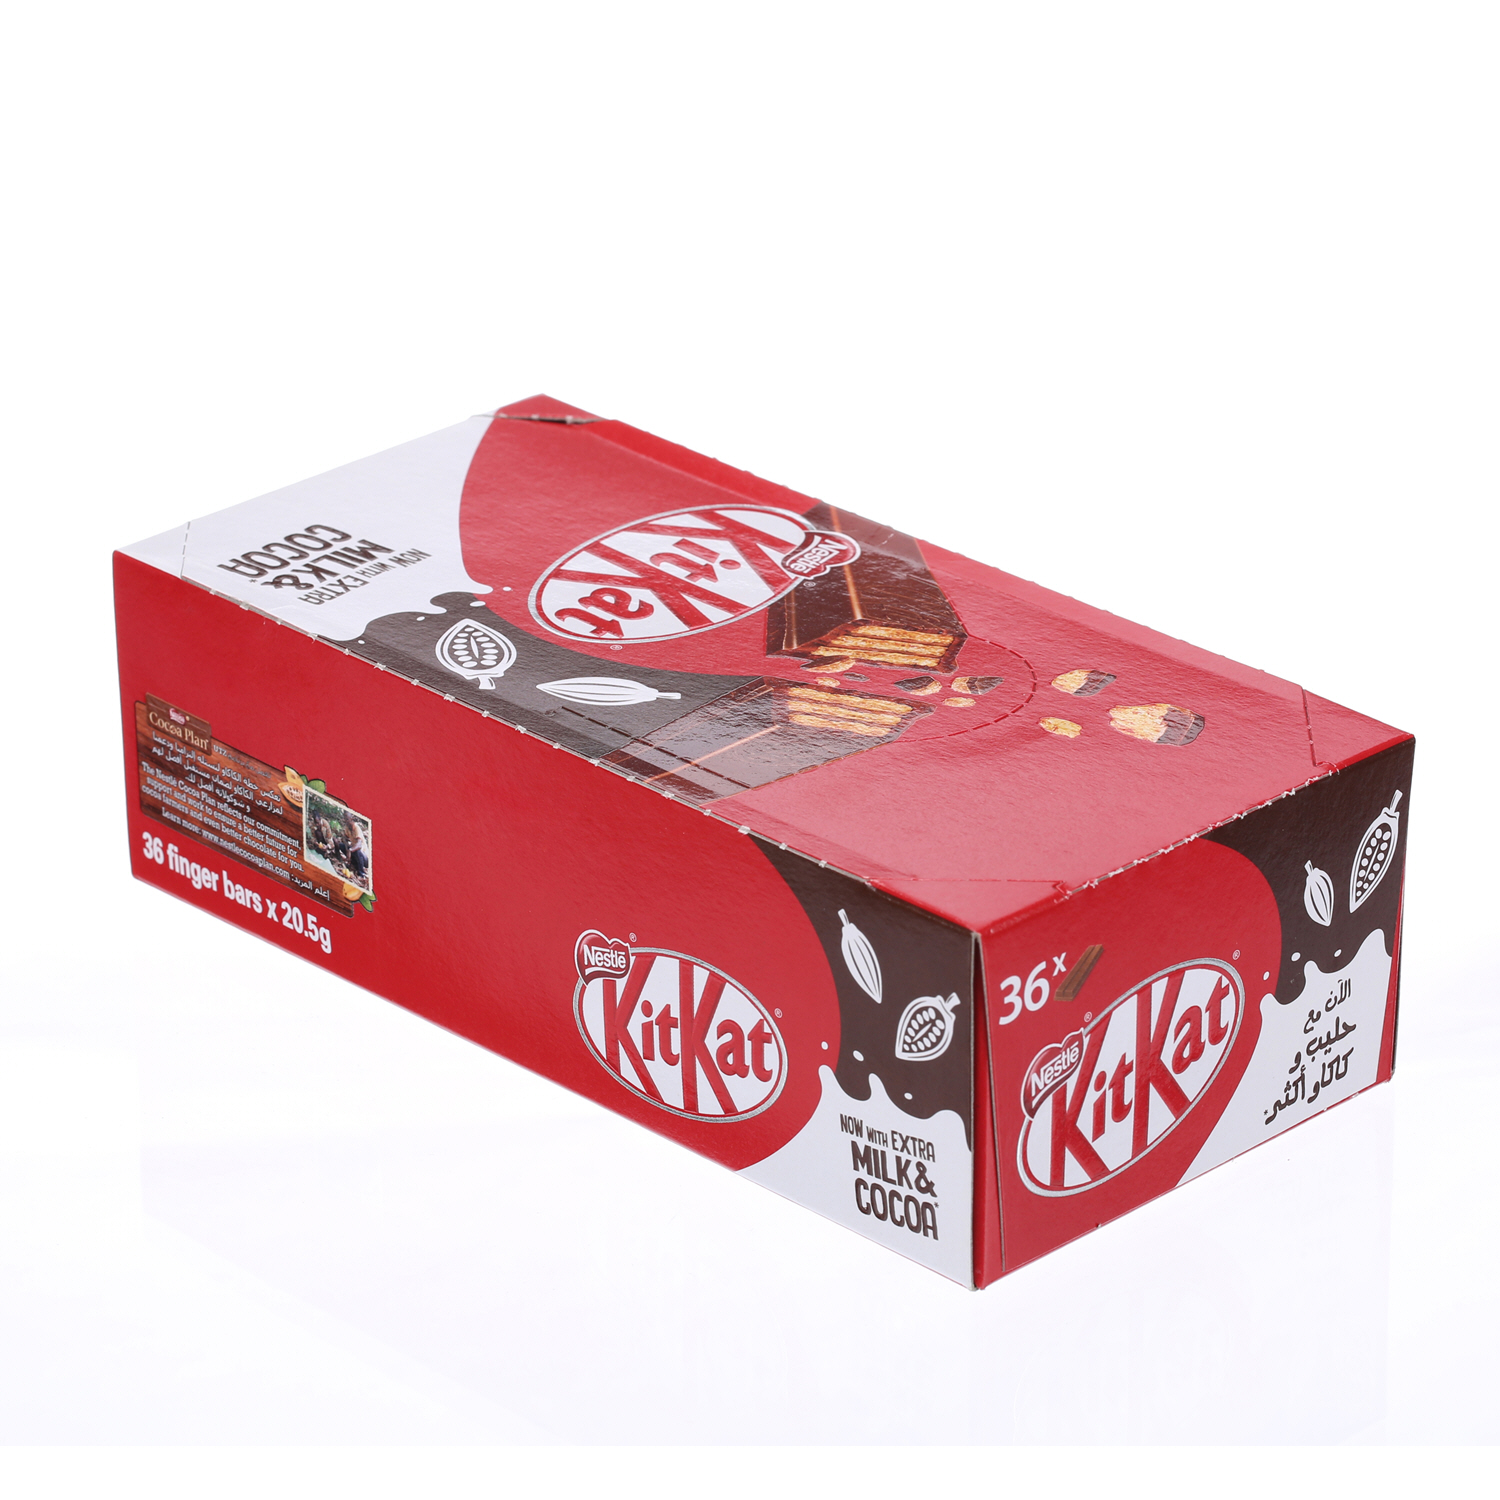 Nestlé Kit Kat Chocolate 2 Finger 20.7gm × 36'S